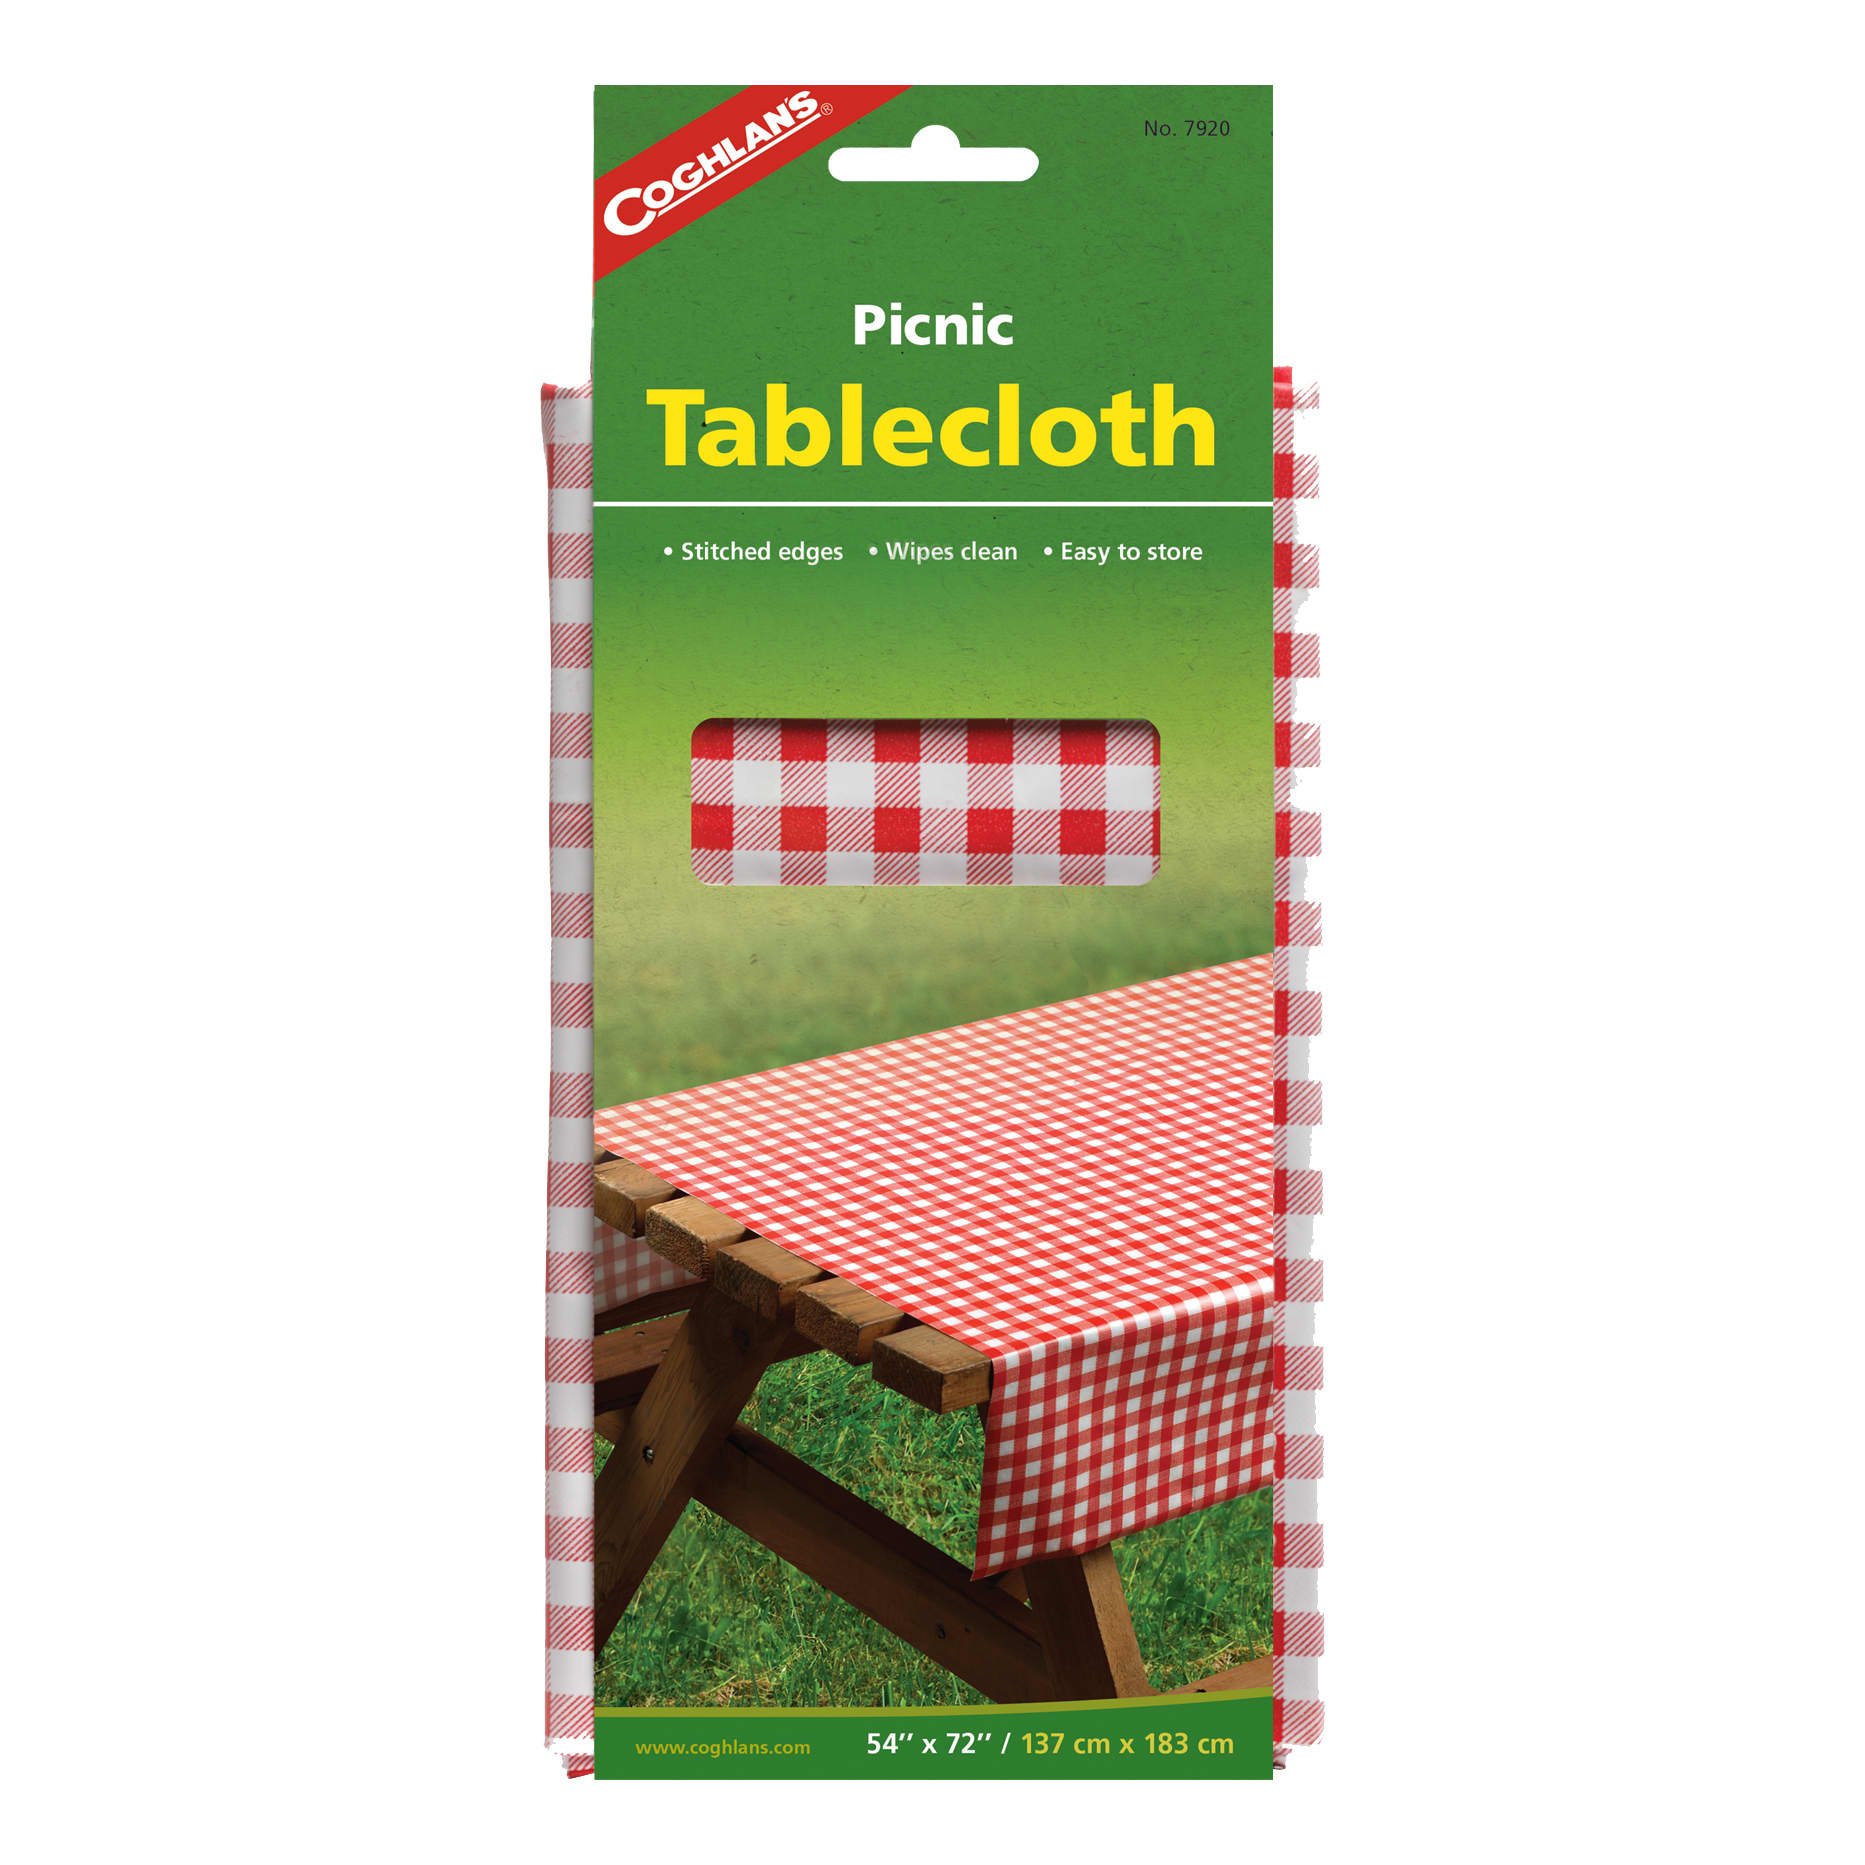 Coghlan's Tablecloth